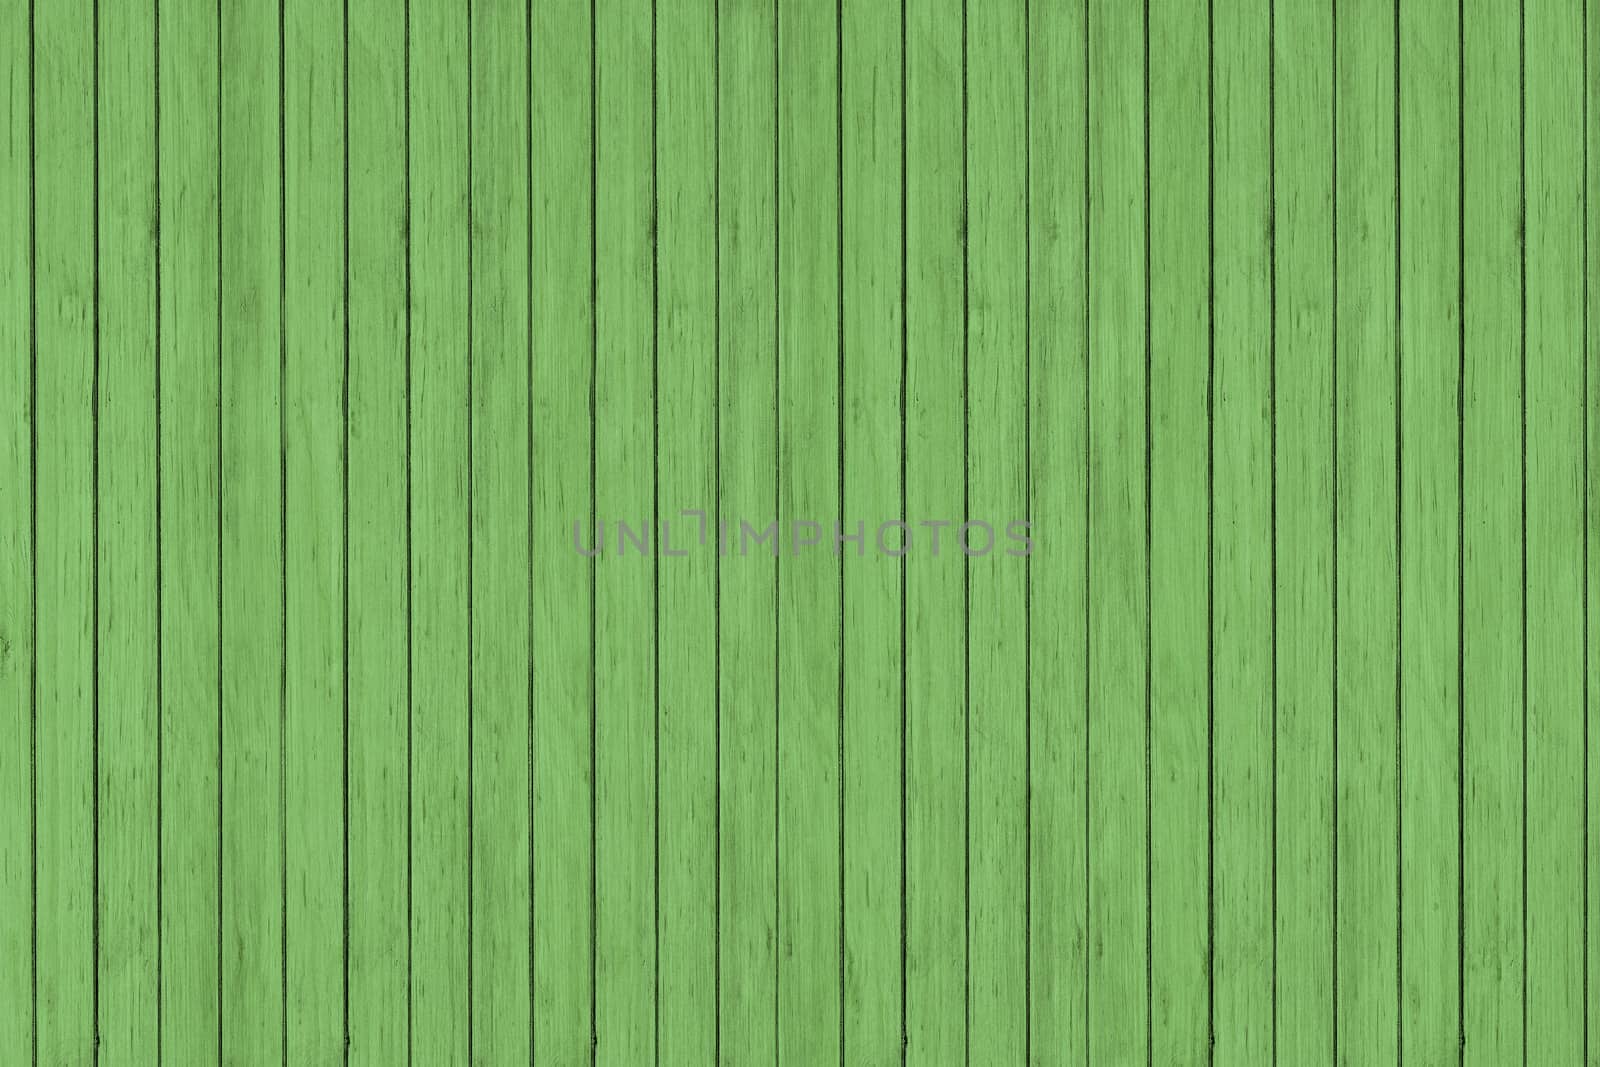 green grunge wood pattern texture background, wooden planks